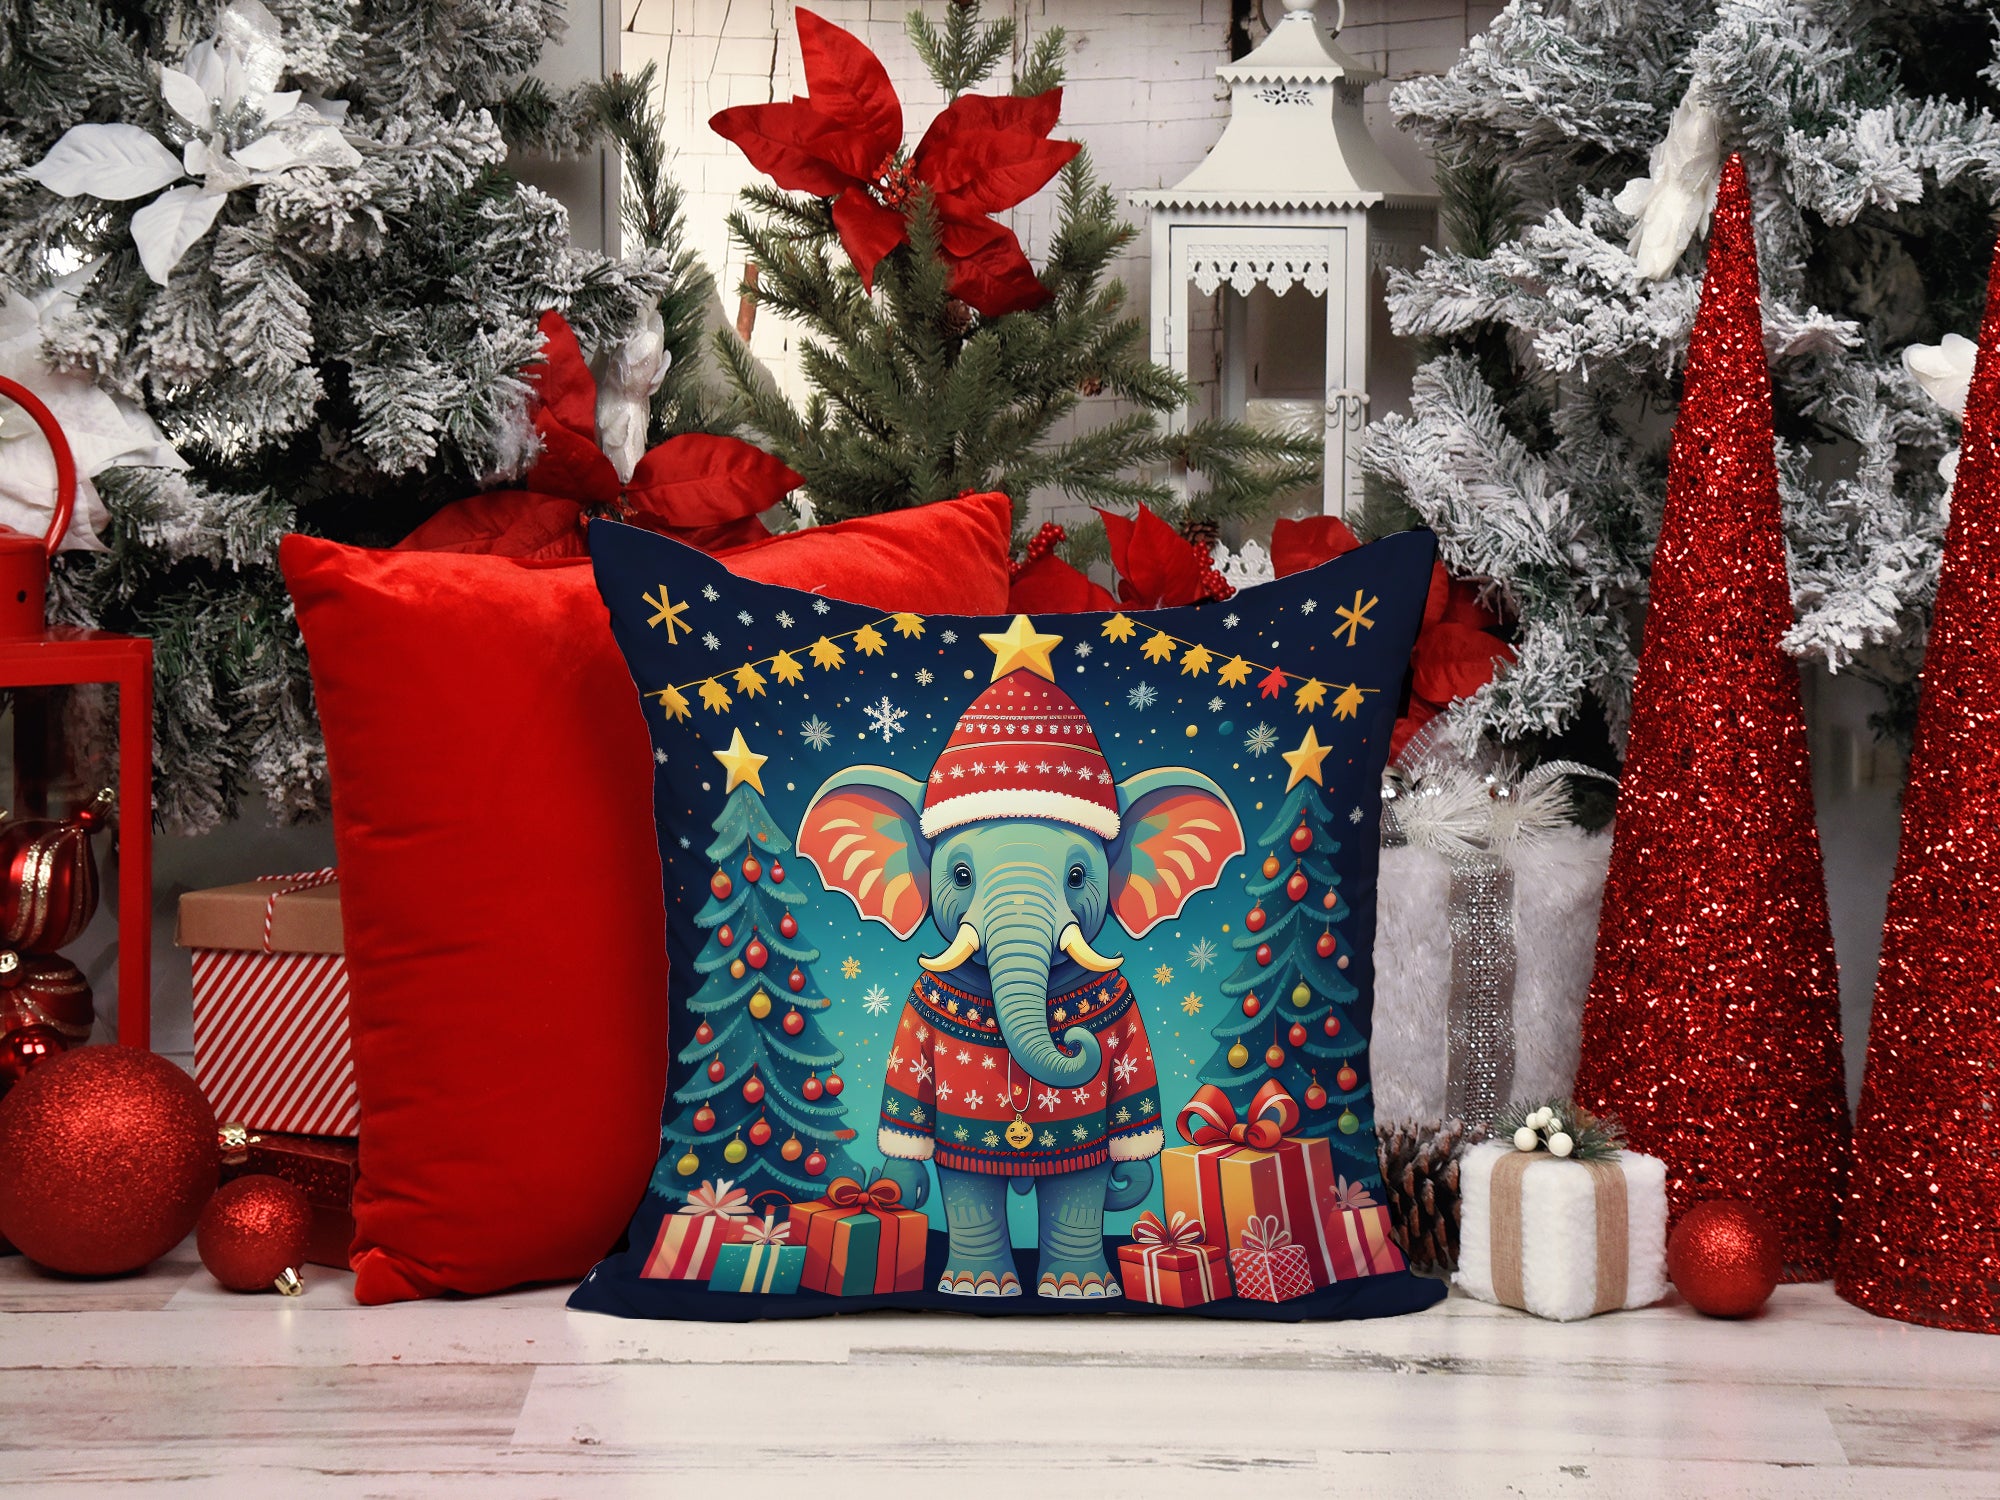 Buy this Elephant Christmas Fabric Decorative Pillow